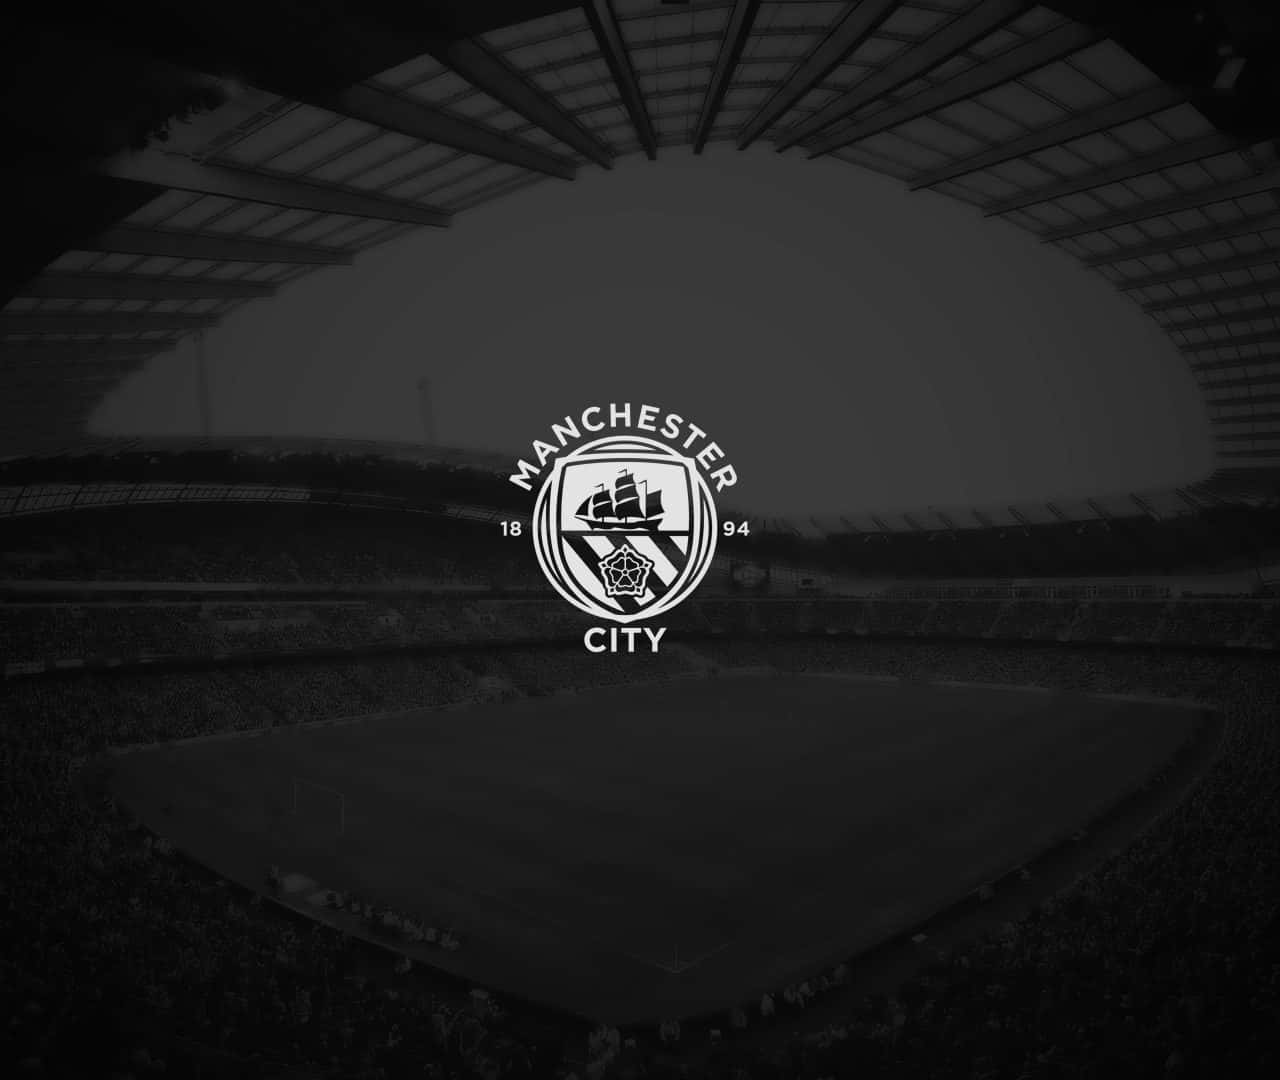 Stödde Blå Med Manchester City Iphone Wallpaper